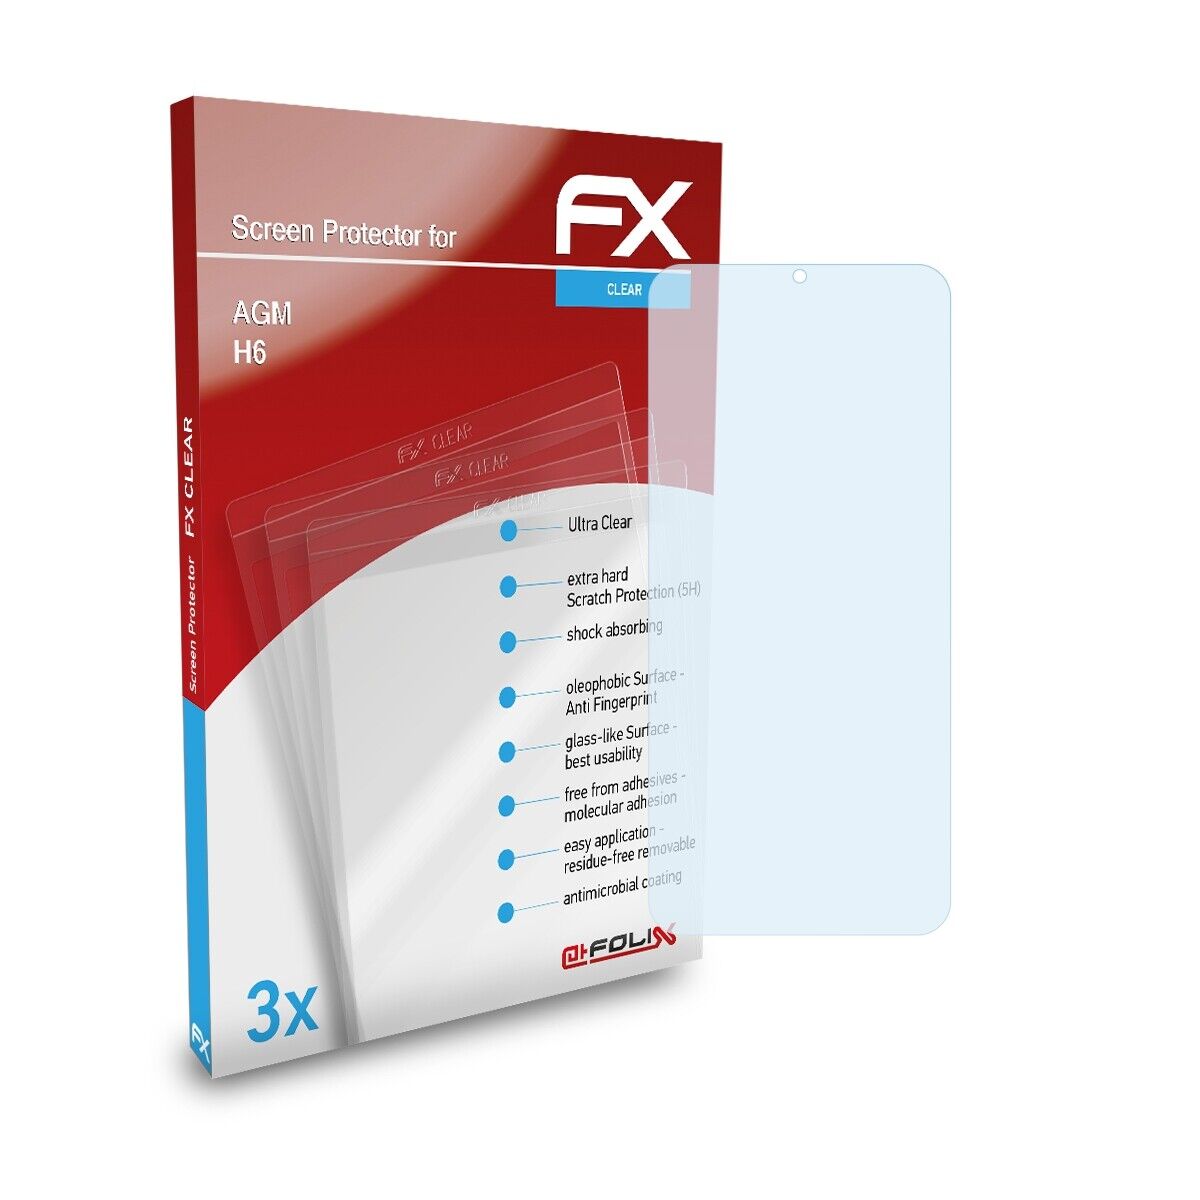 atFoliX 3x Película Protectora para AGM H6 transparente